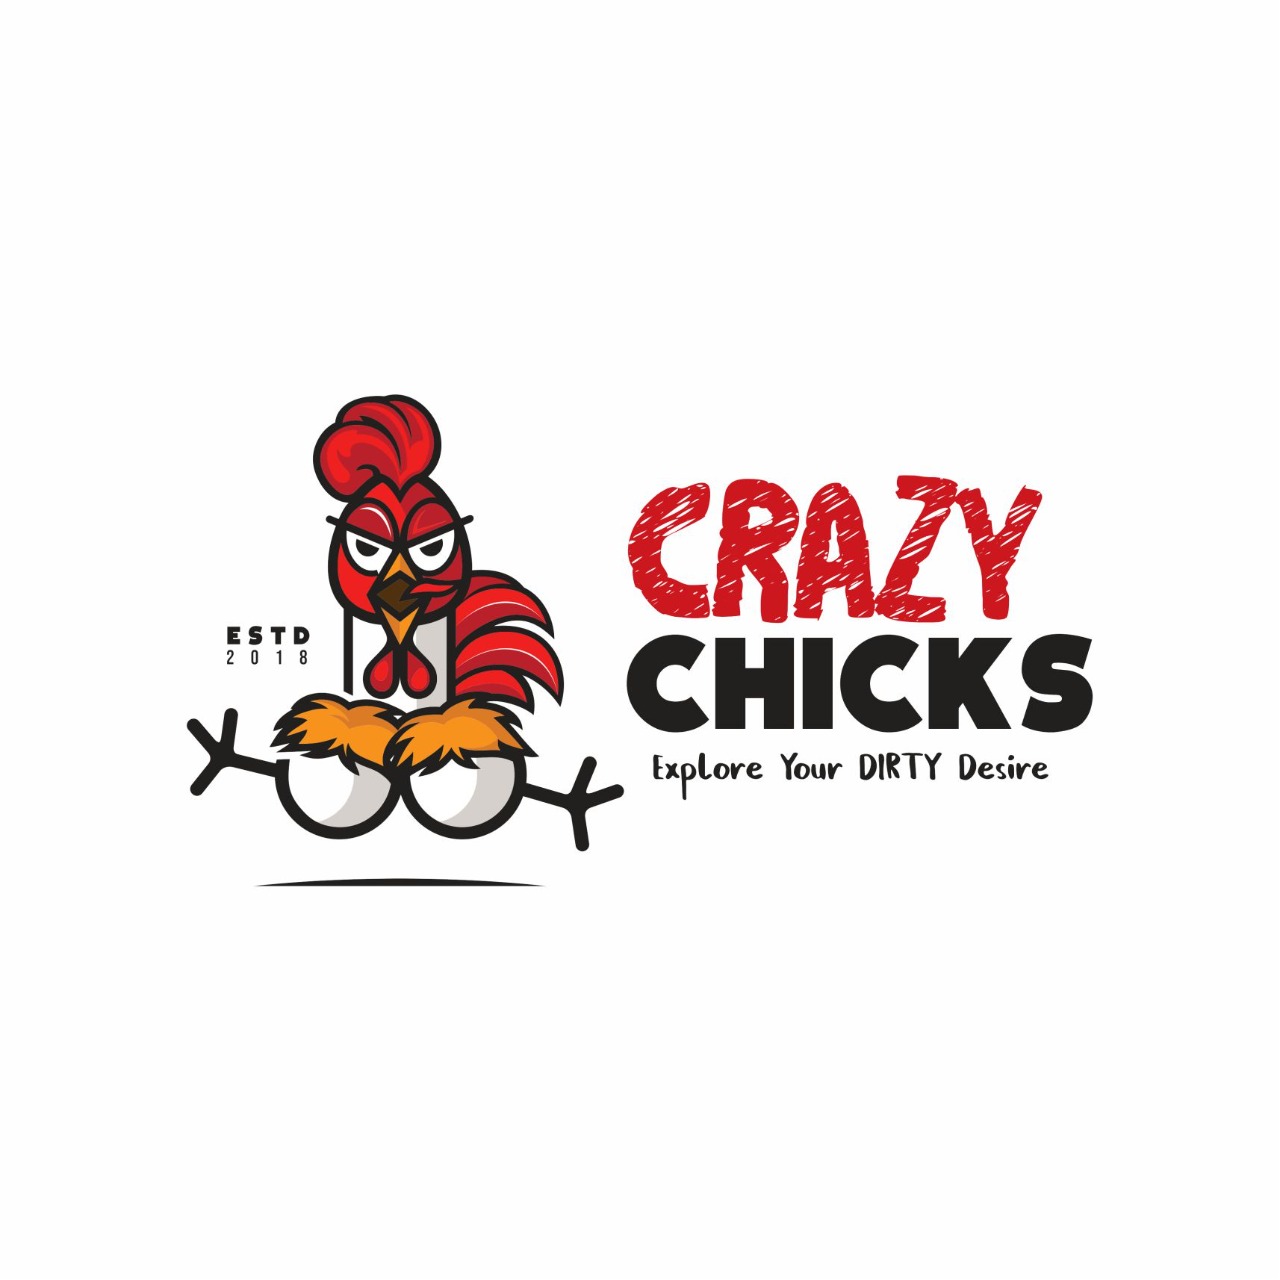 Lowongan-Kerja-Crazy-Chicks-Penempatan-Tasikmalaya